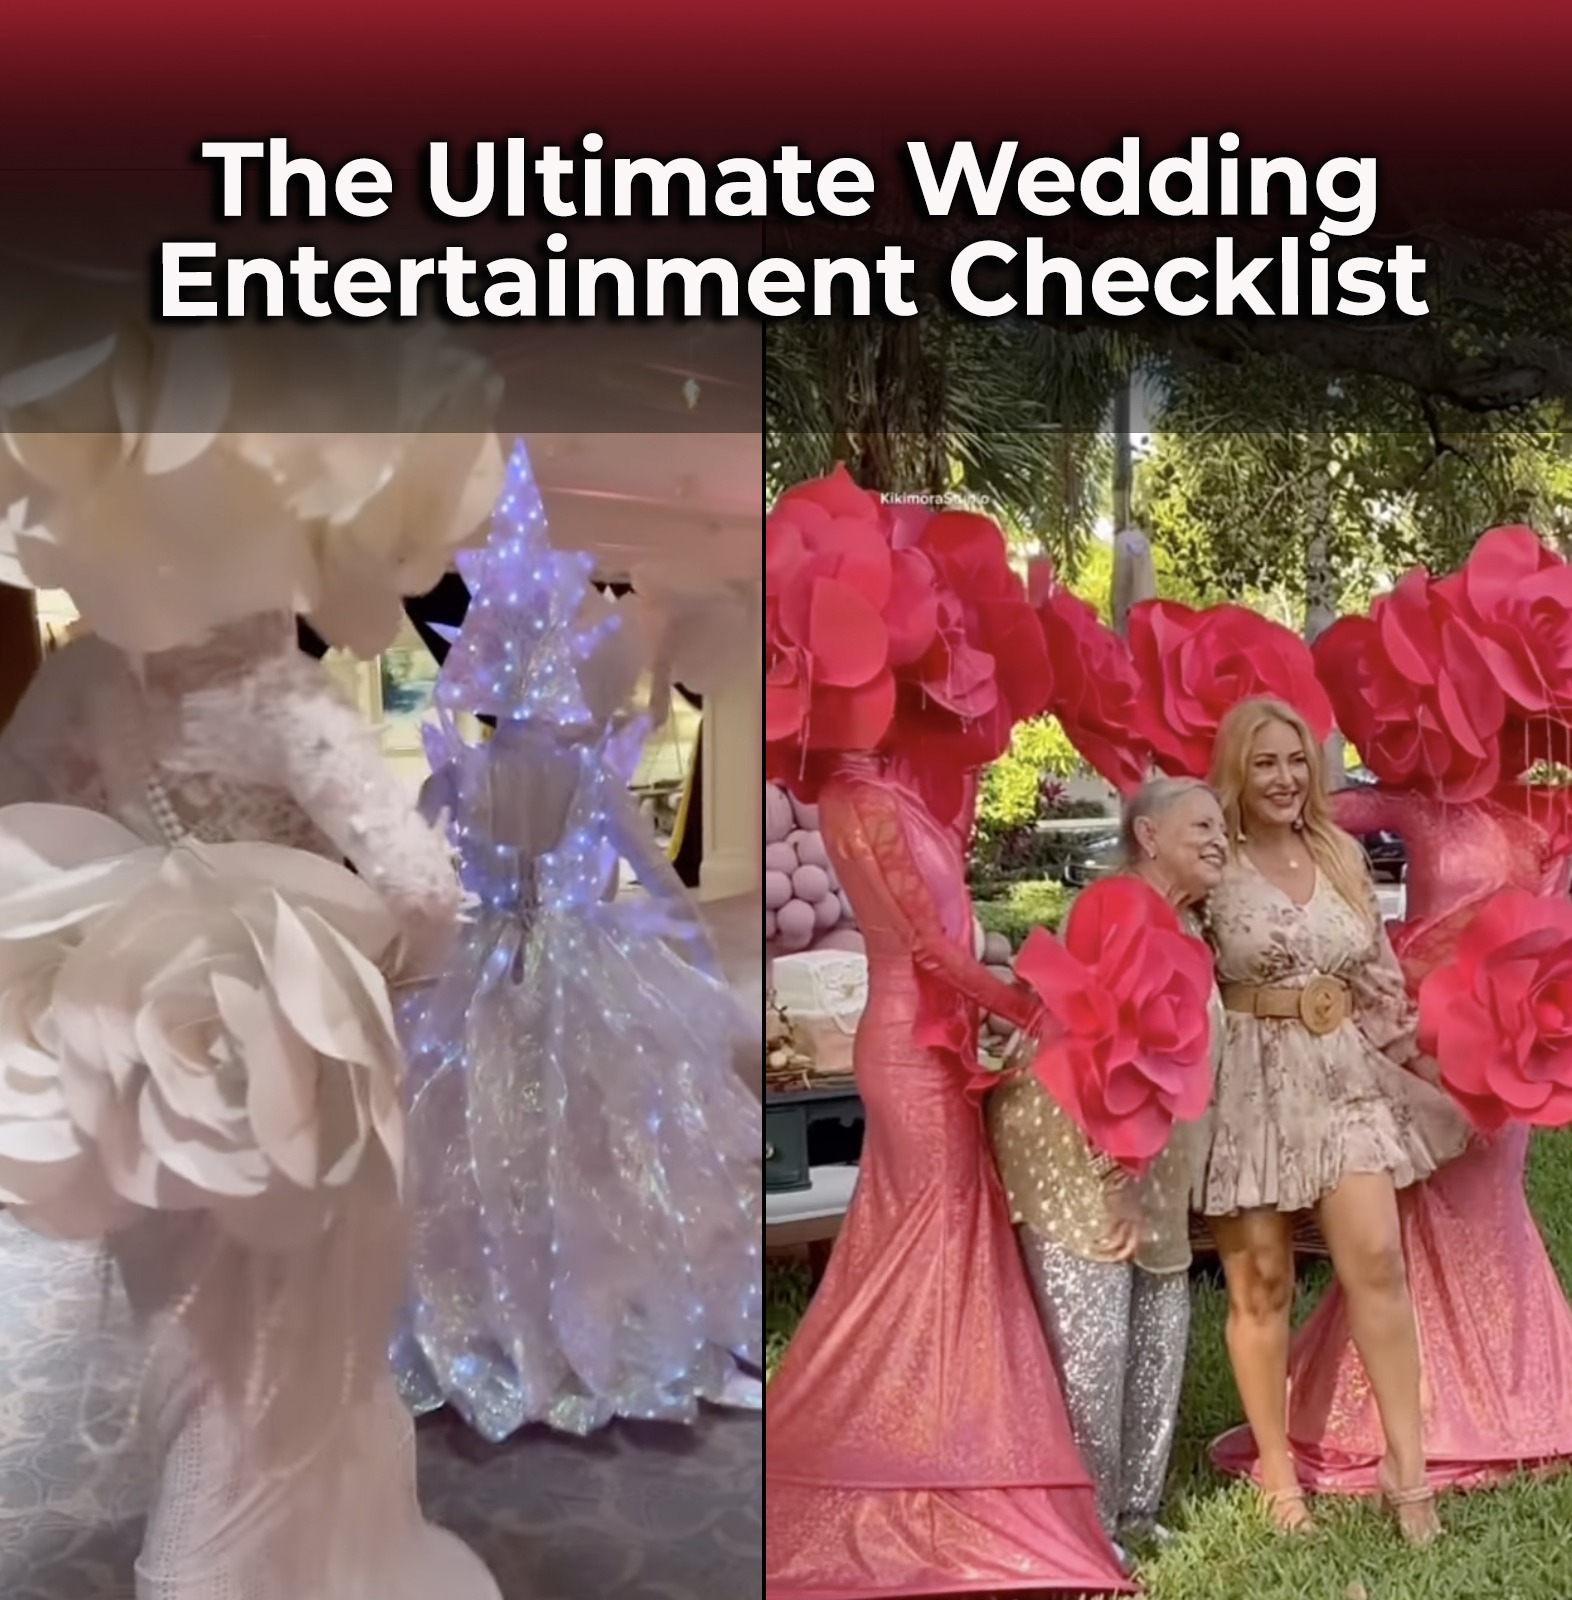 The Ultimate Wedding Entertainment Checklist